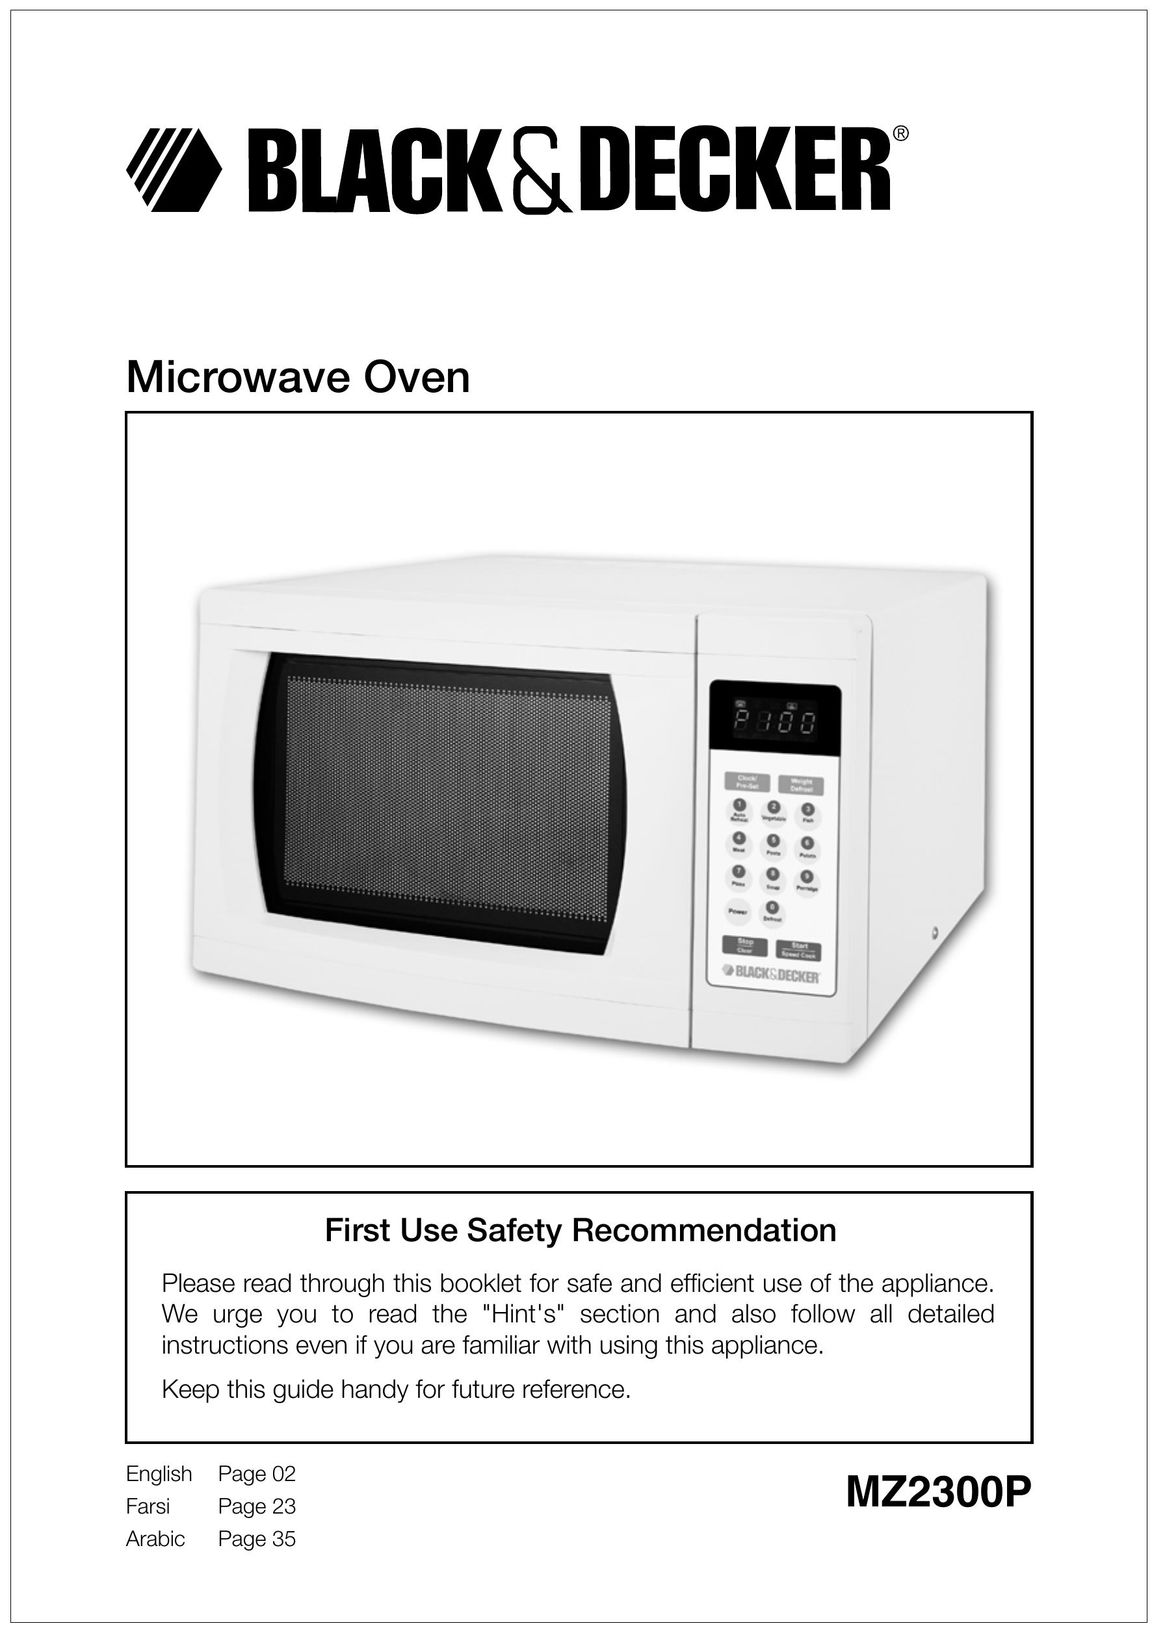 Black & Decker MZ2300P Microwave Oven User Manual